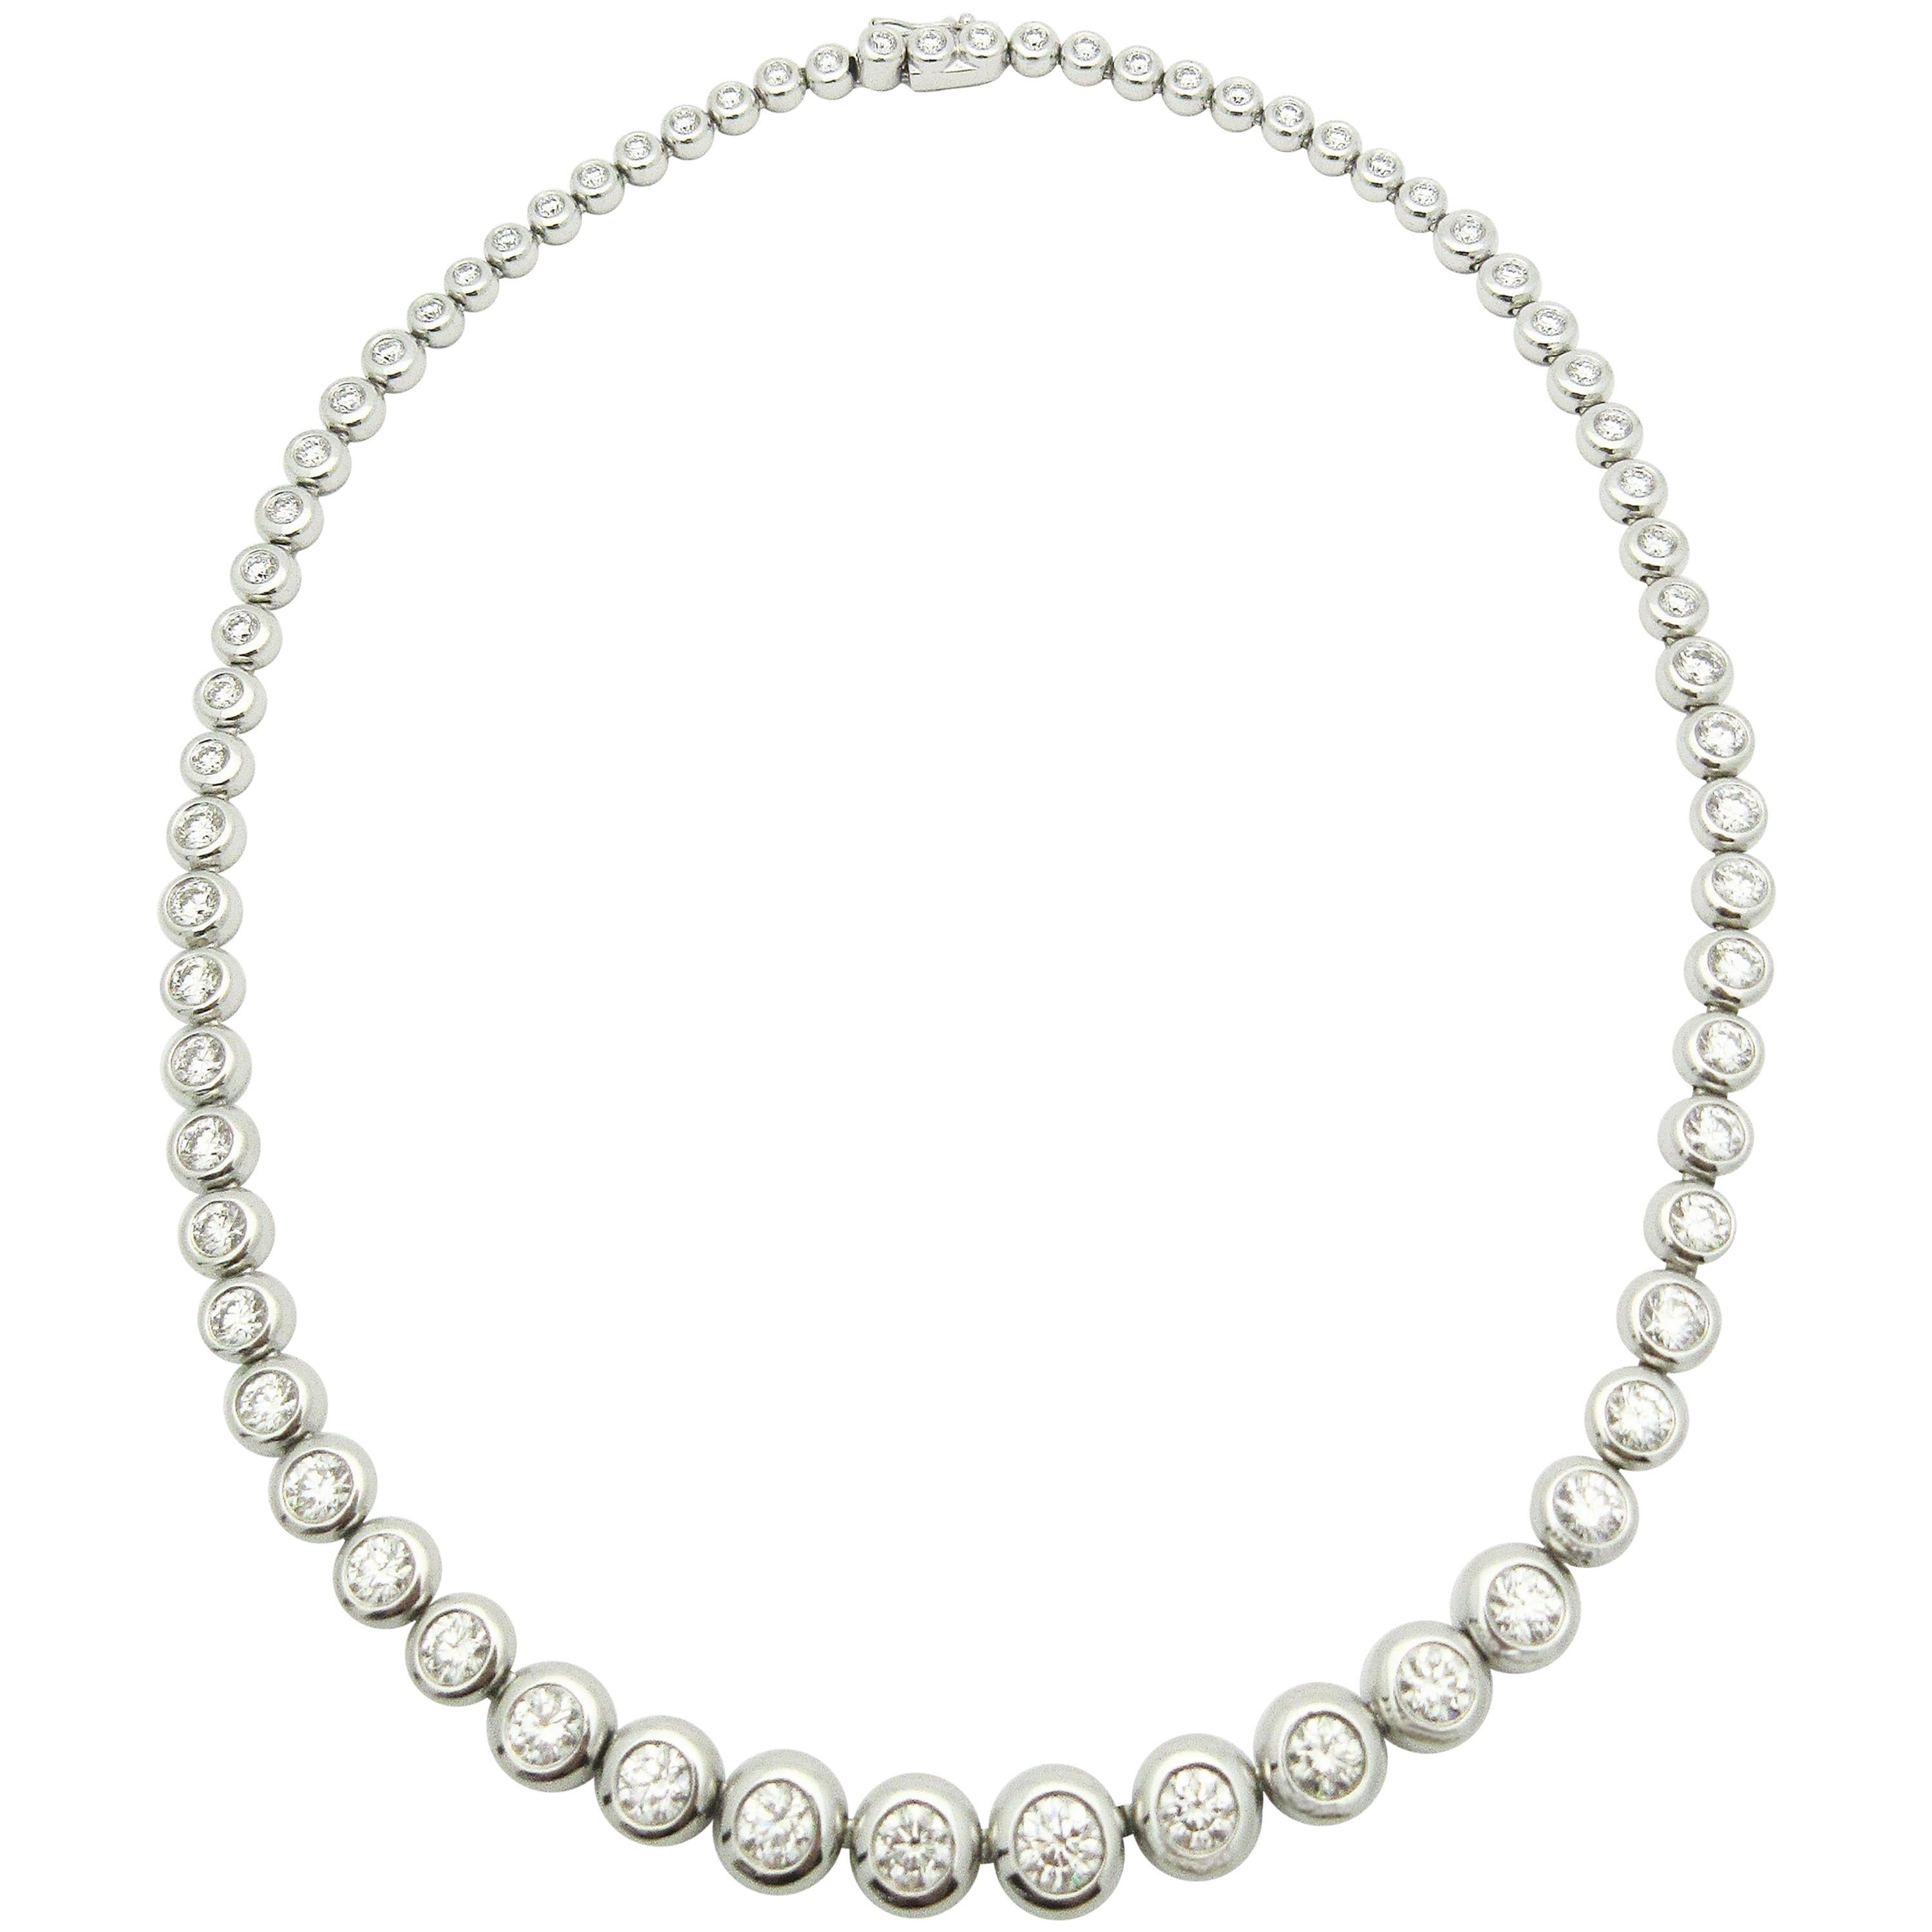 15 Carat Diamond Riviere Necklace